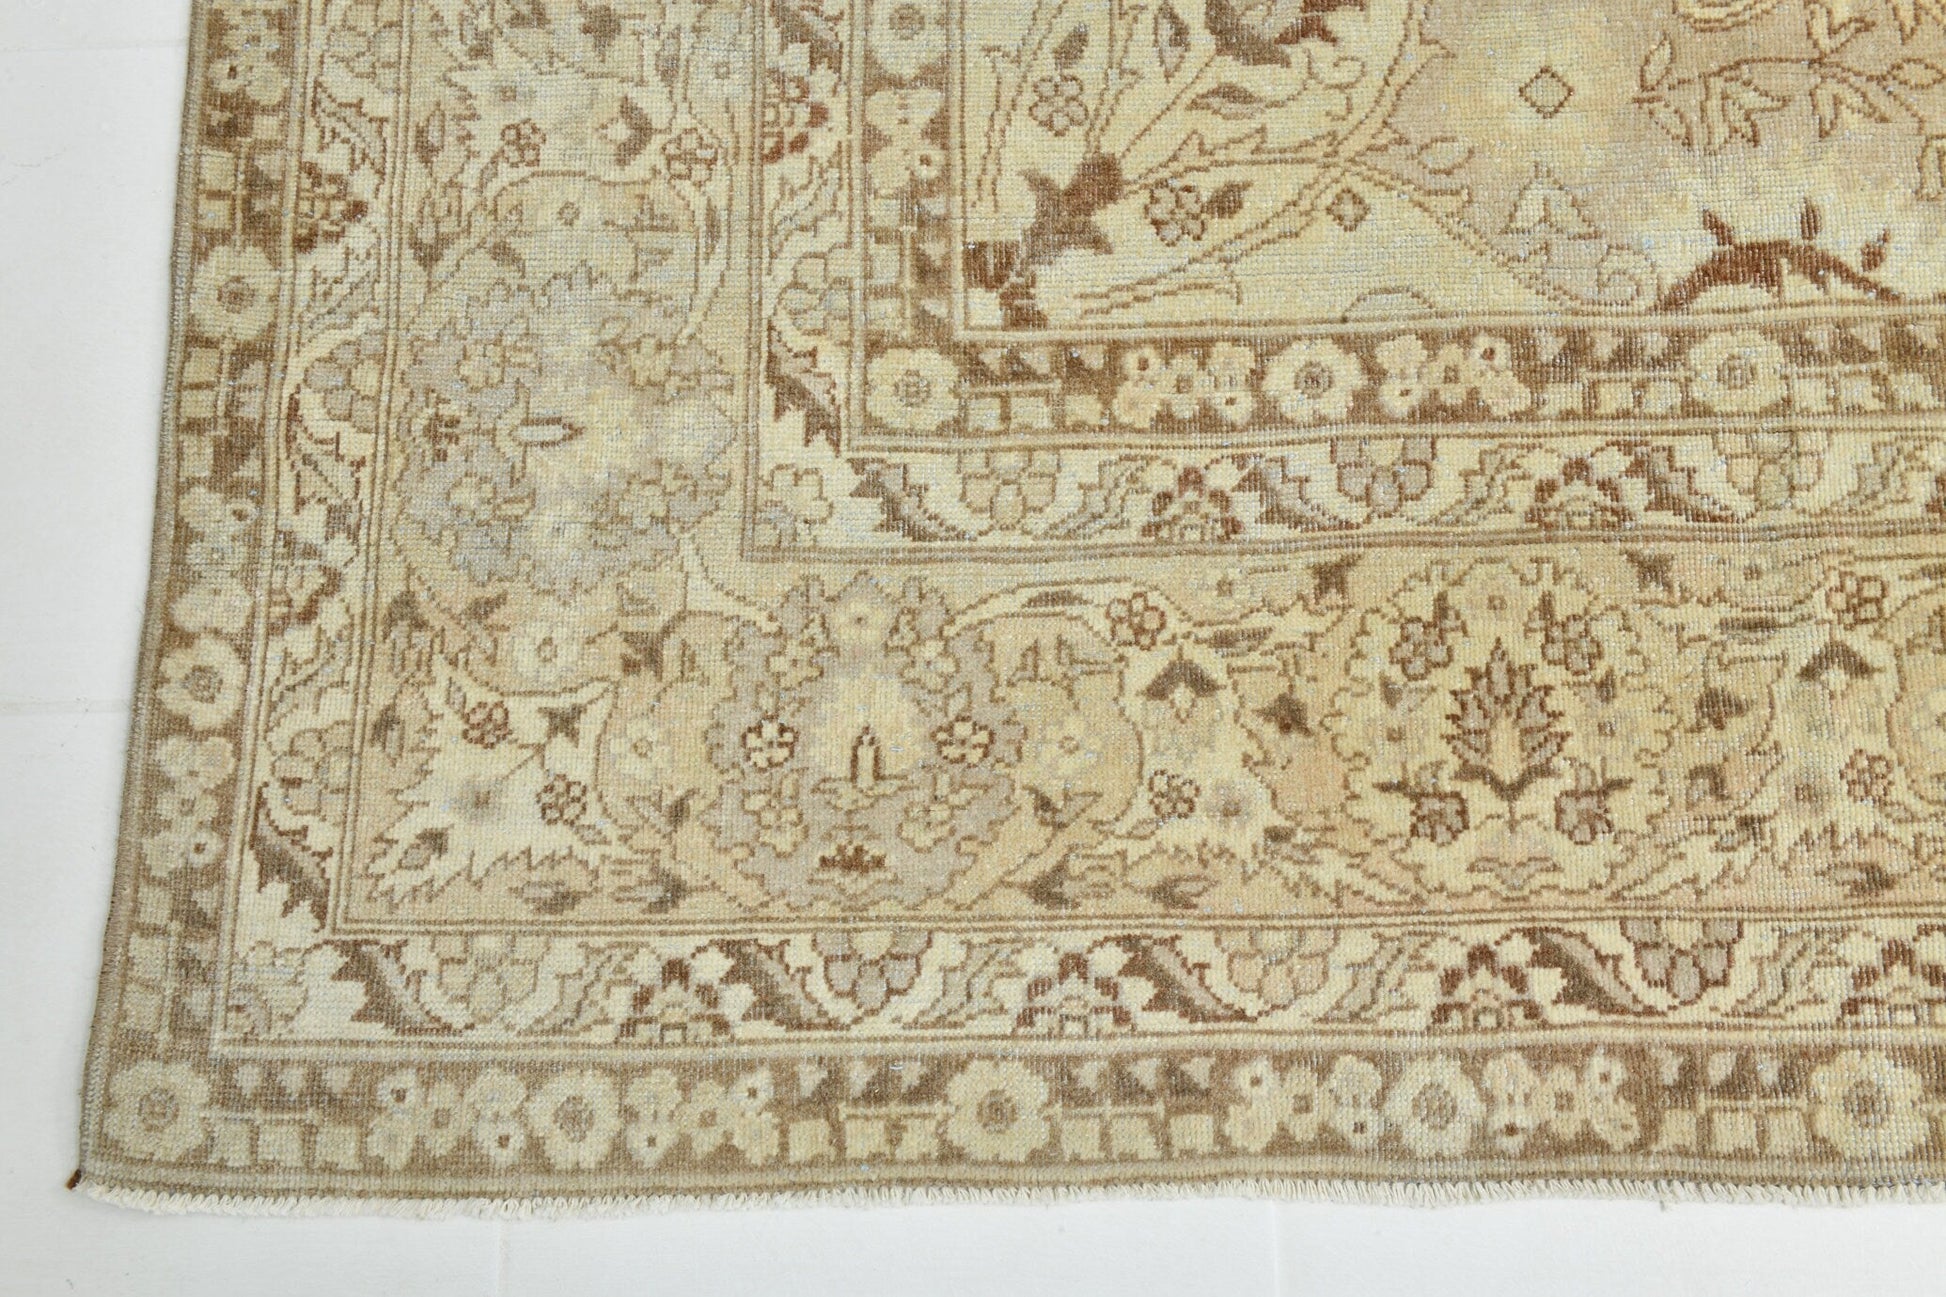 11’ x 15’ Vintage Persian Style Rug - 18401 - Zengoda Shop online from Artisan Brands